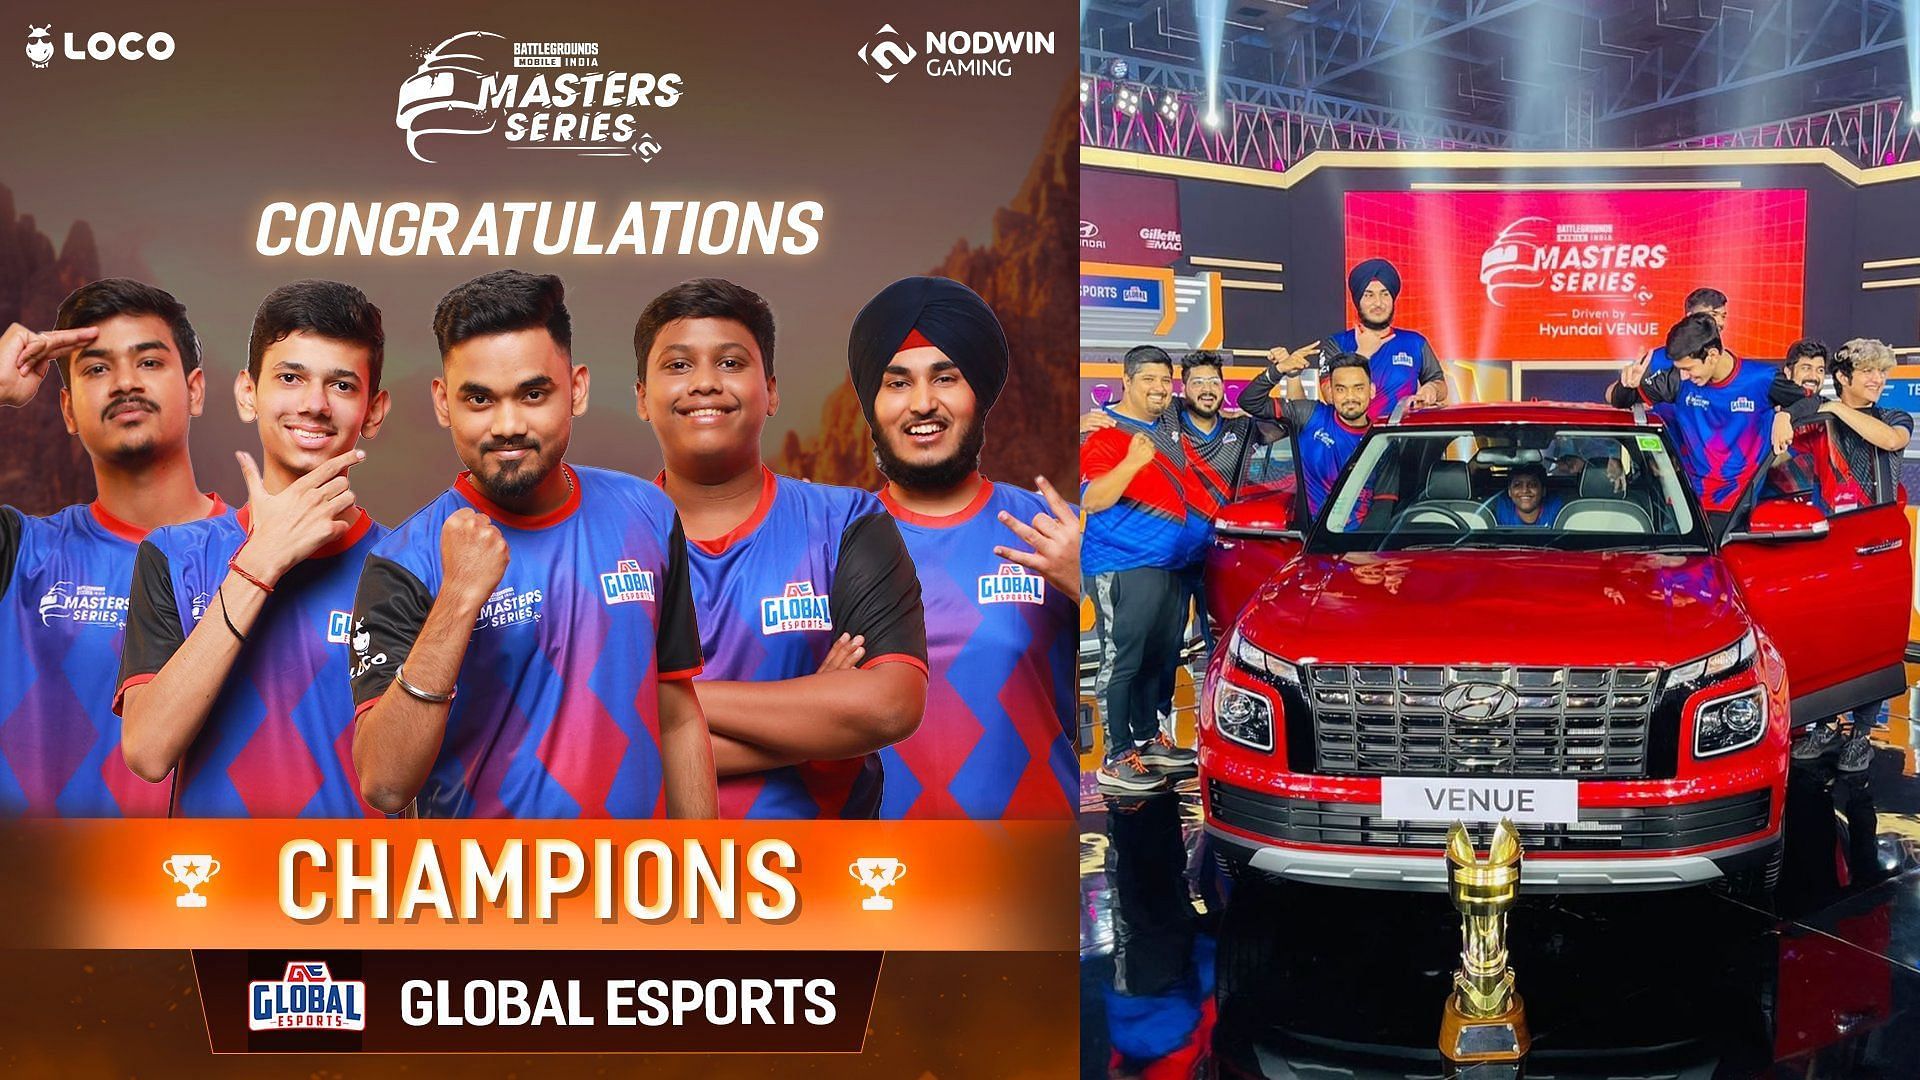 Global Esports claimed the BGMI Masters Series crown (Image via Sportskeeda)